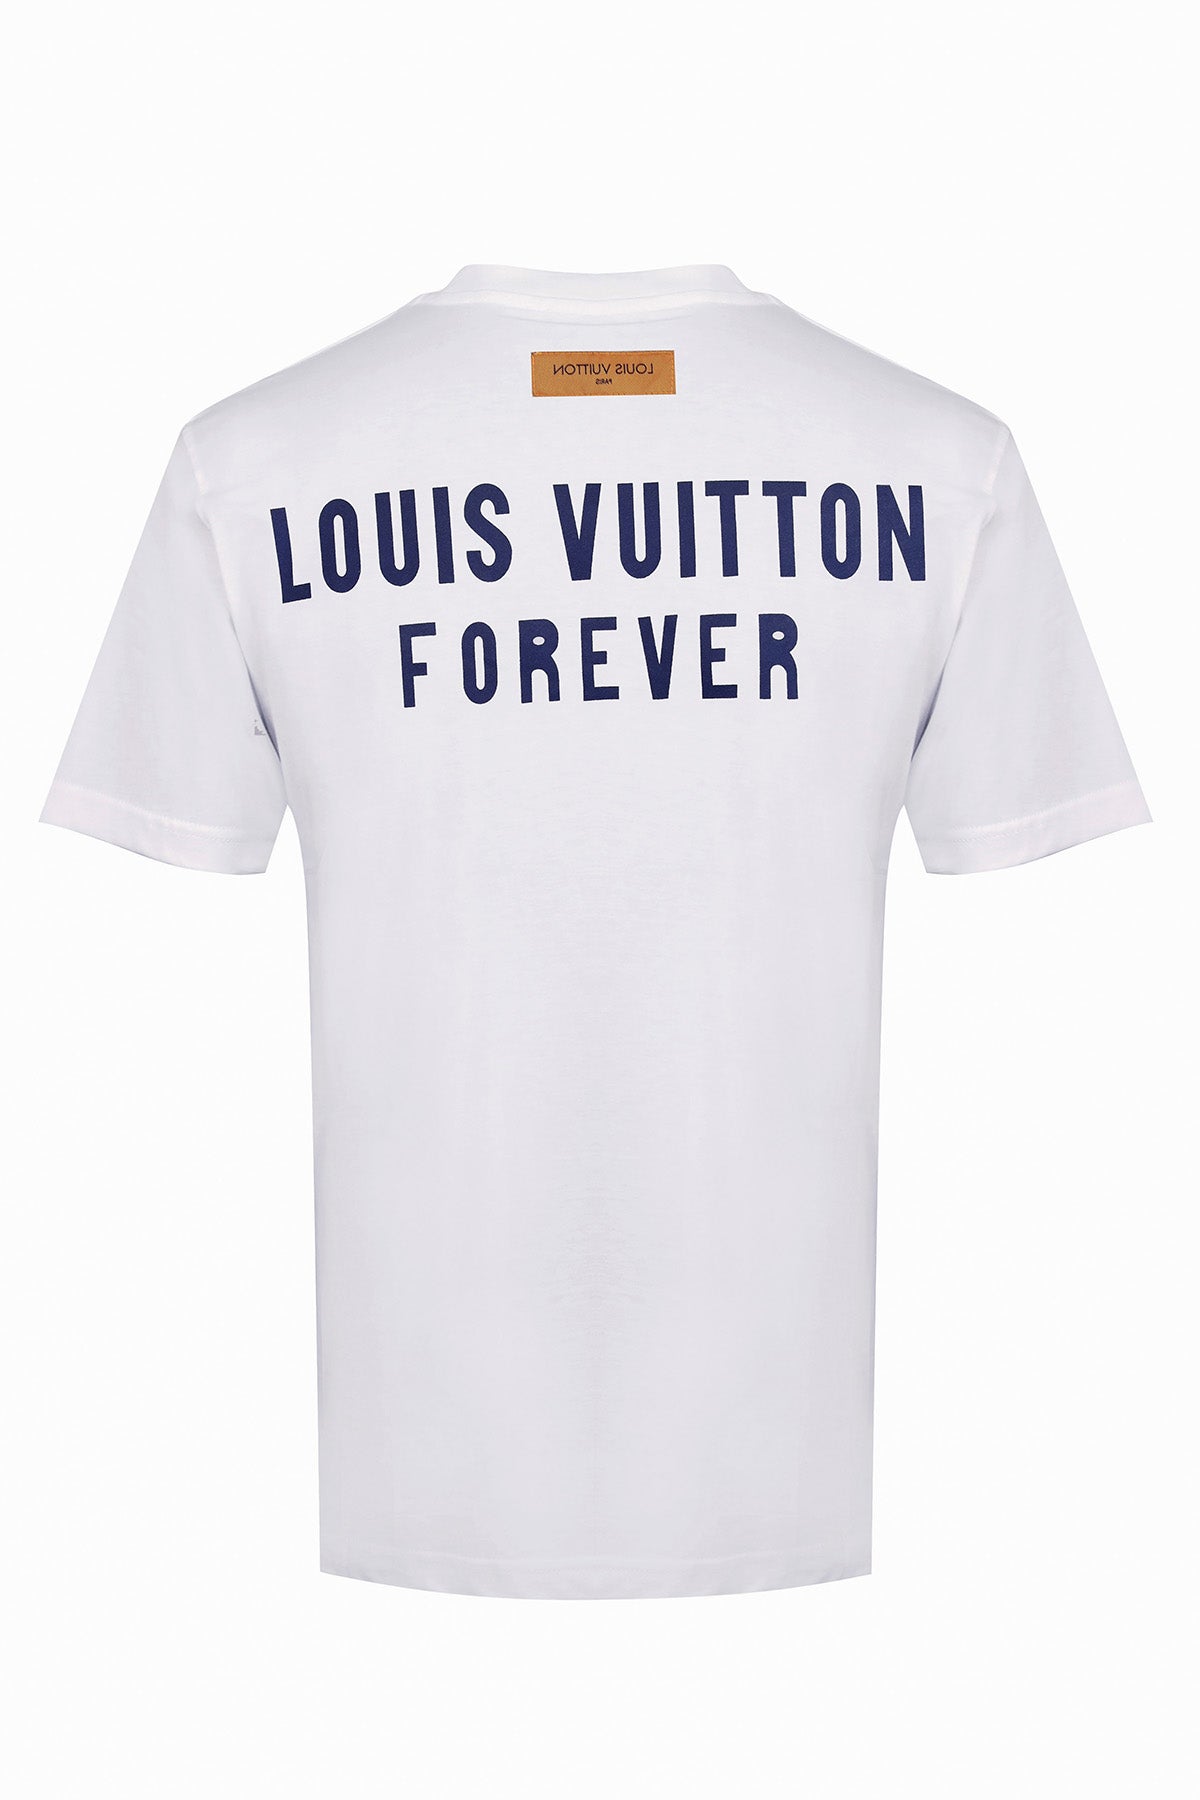 New!!!Louis Vuitton Forever T-Shirt เสื้อยืดคอกลมสกรีนลายVivienne